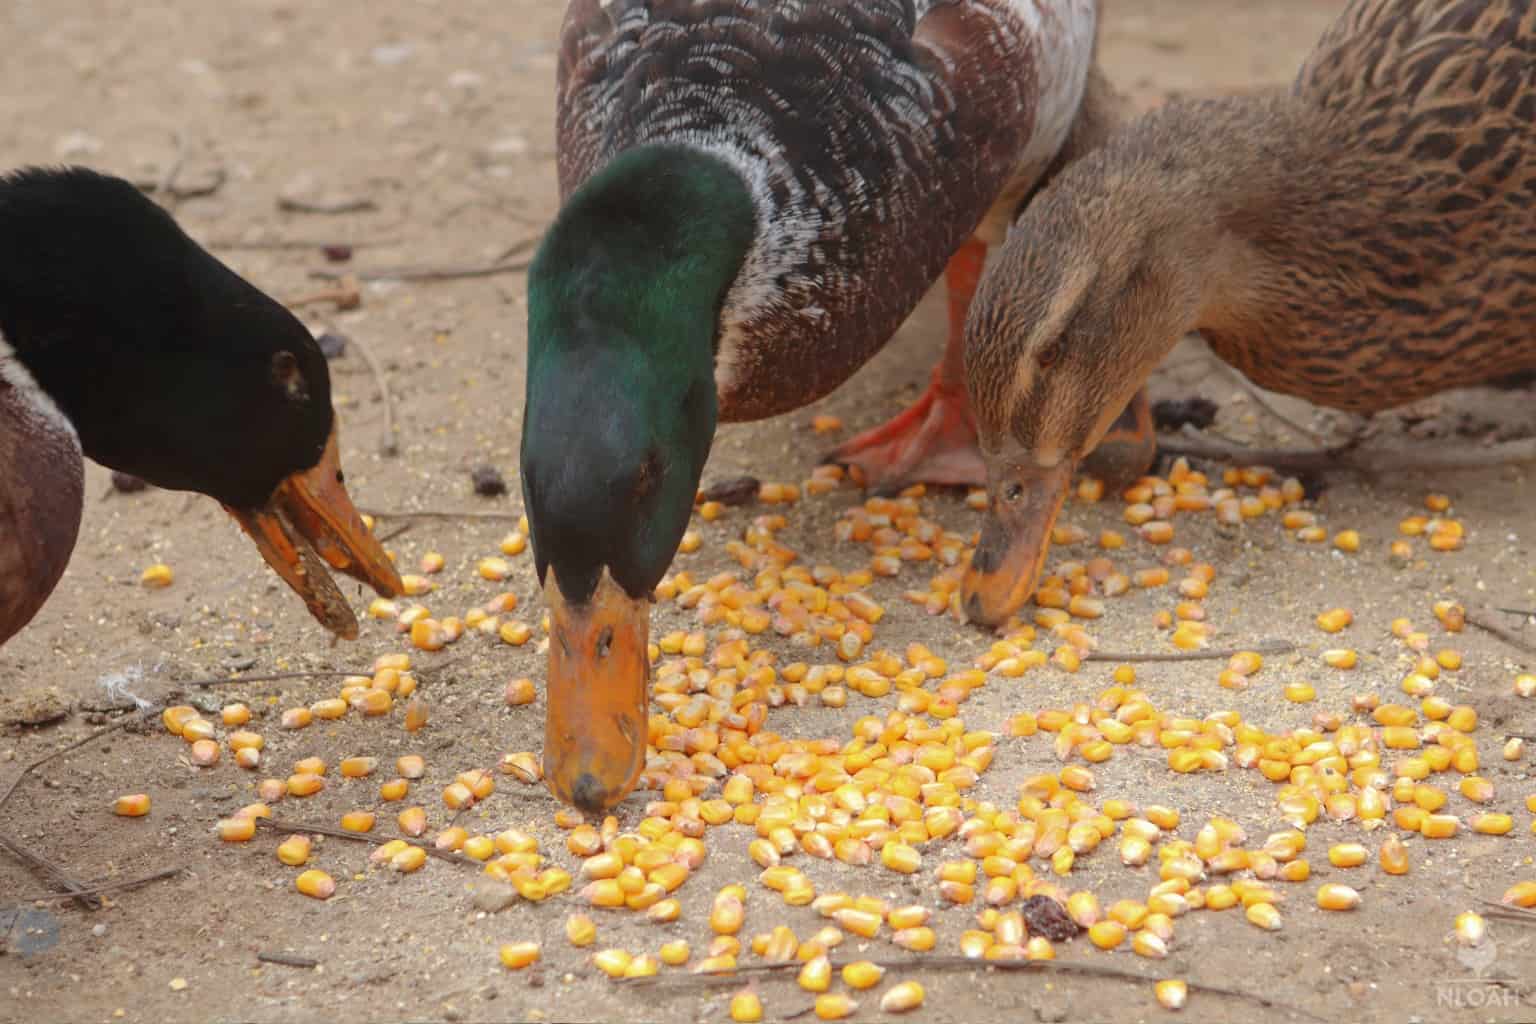 three ducks eating some corn